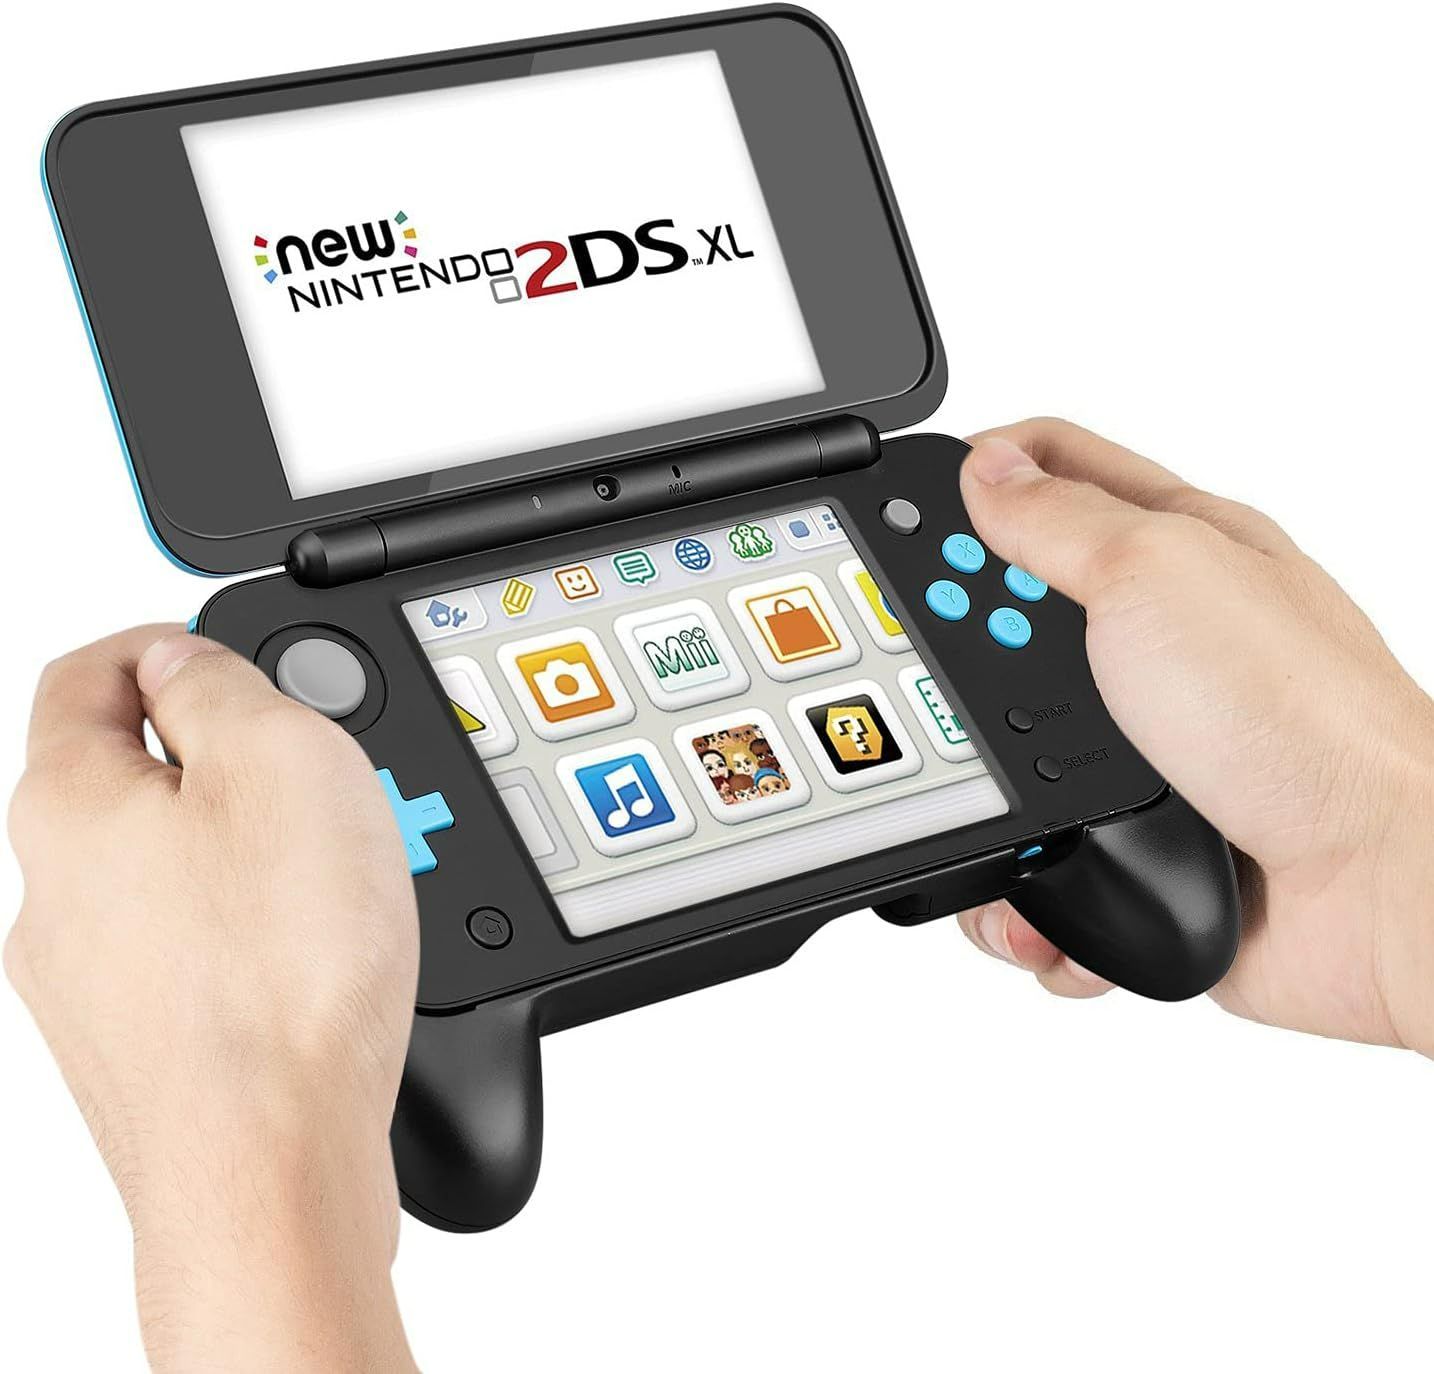 NEW Nintendo 2DS LL スタンド グリップ型 スタンド ゲーミンググリップ 本機用 ハンドル new 2dsll 専用 ゲームグリップ  任天堂 NEWニンテンドー 2DS NEW任天堂2DS ニンテンドー2DS ゲーム ゲーミング 便利 ニュー